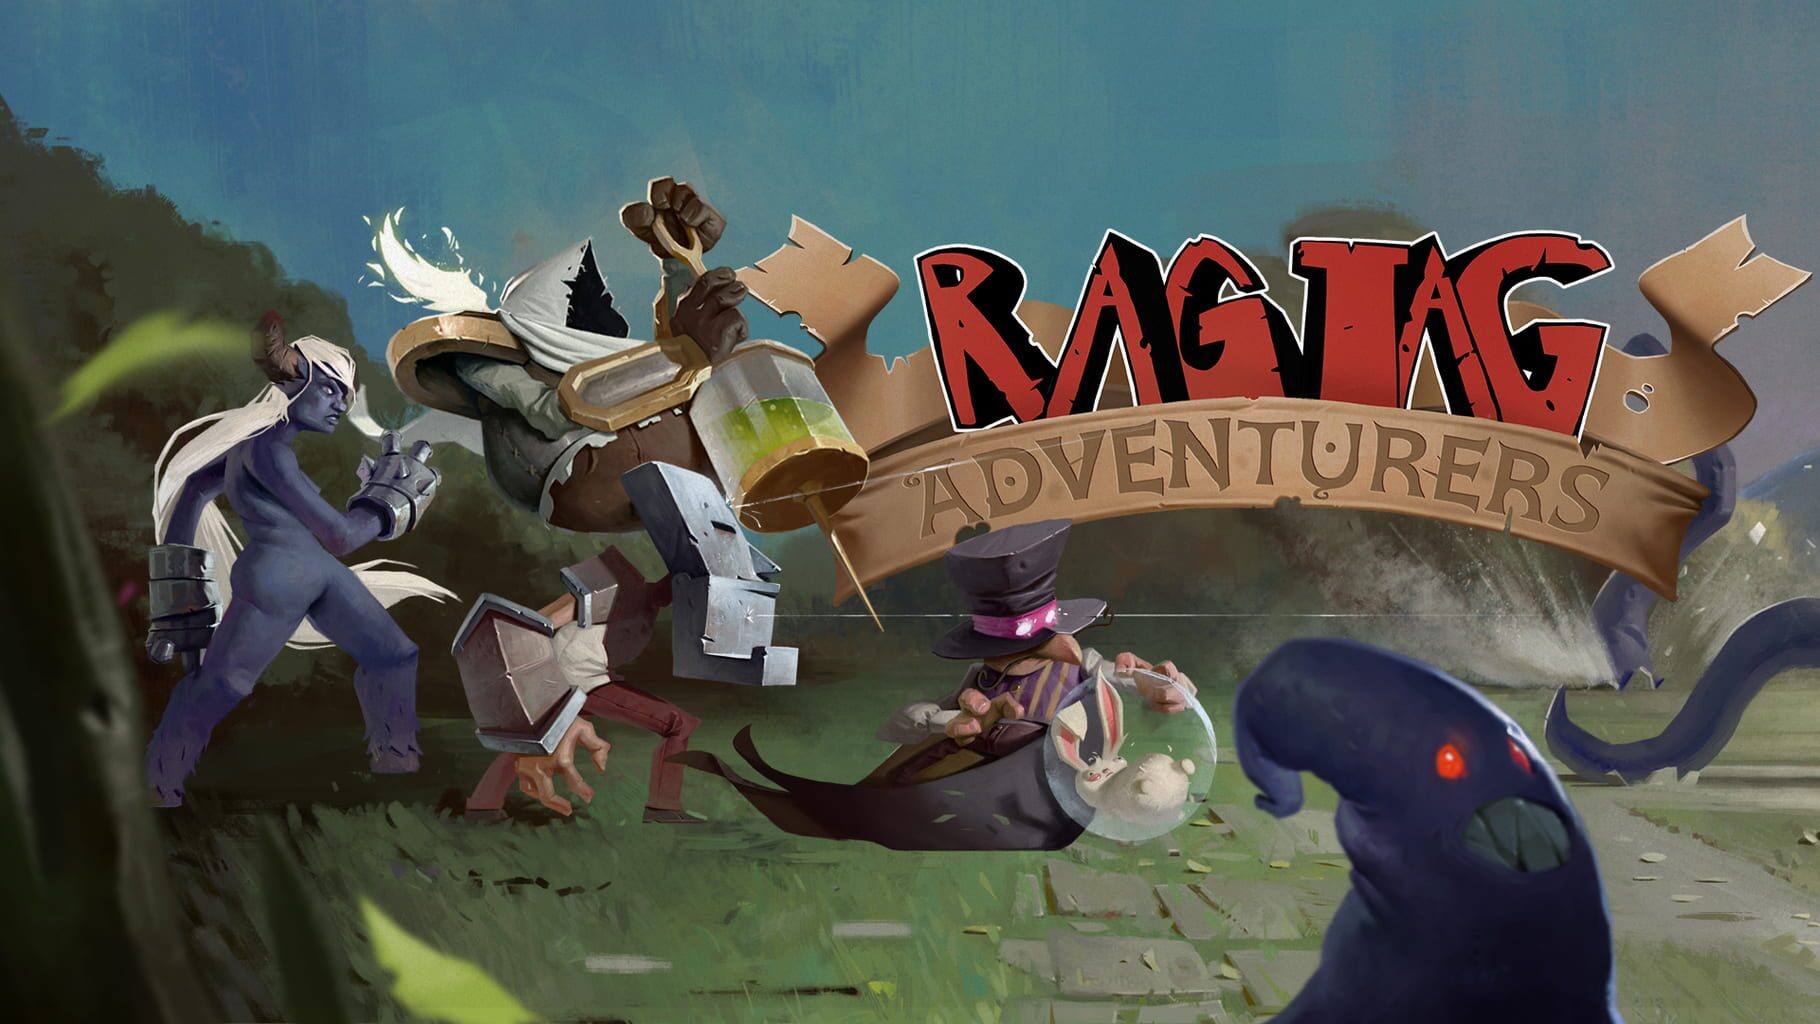 Ragtag Adventurers artwork